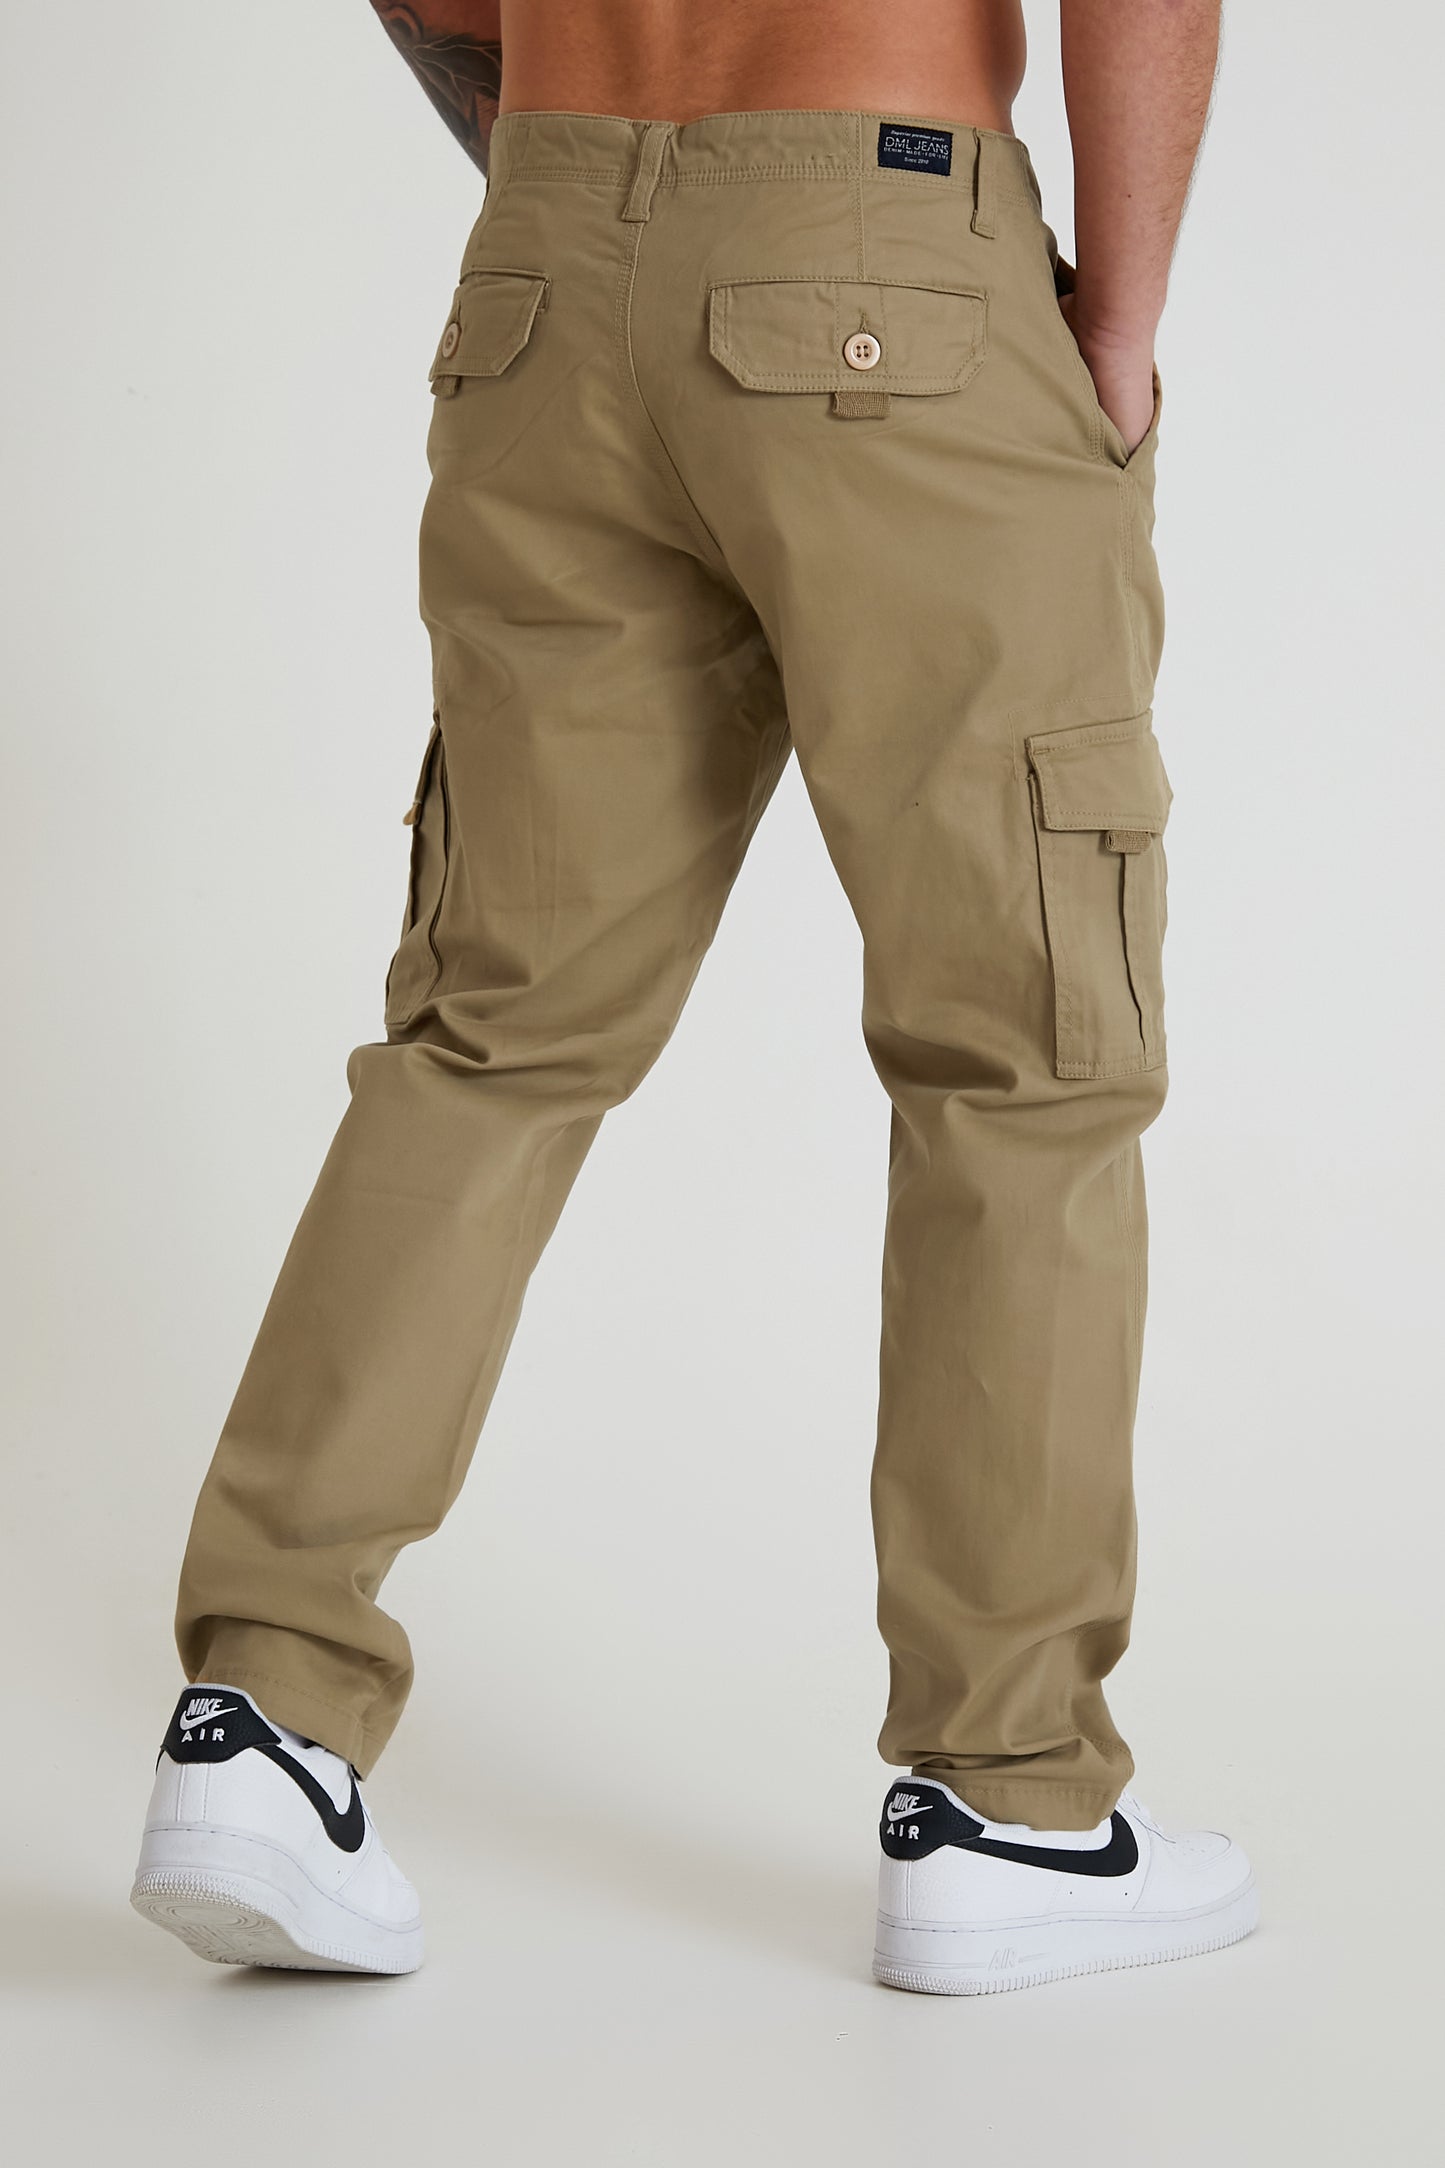 NIGHTHAWK Cargo pant in premium cotton twill - HARVEST GOLD - DML Jeans 